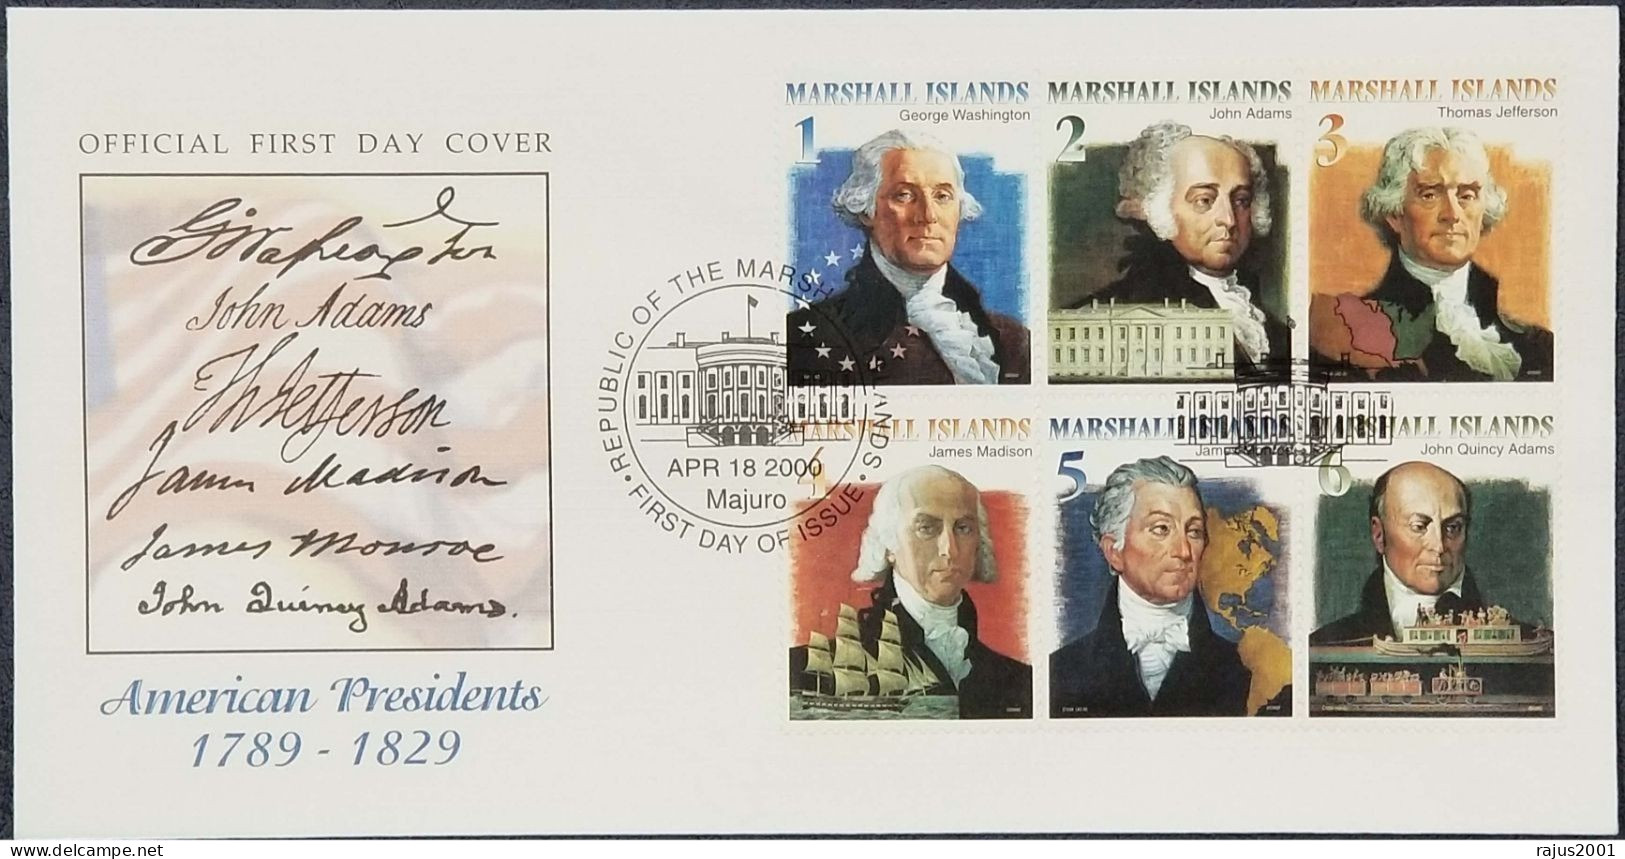 American Presidents, USS Constitution, James Madison, John Adams, Presidents Printed  Autograph Marshall Island FDC 2000 - Marshallinseln